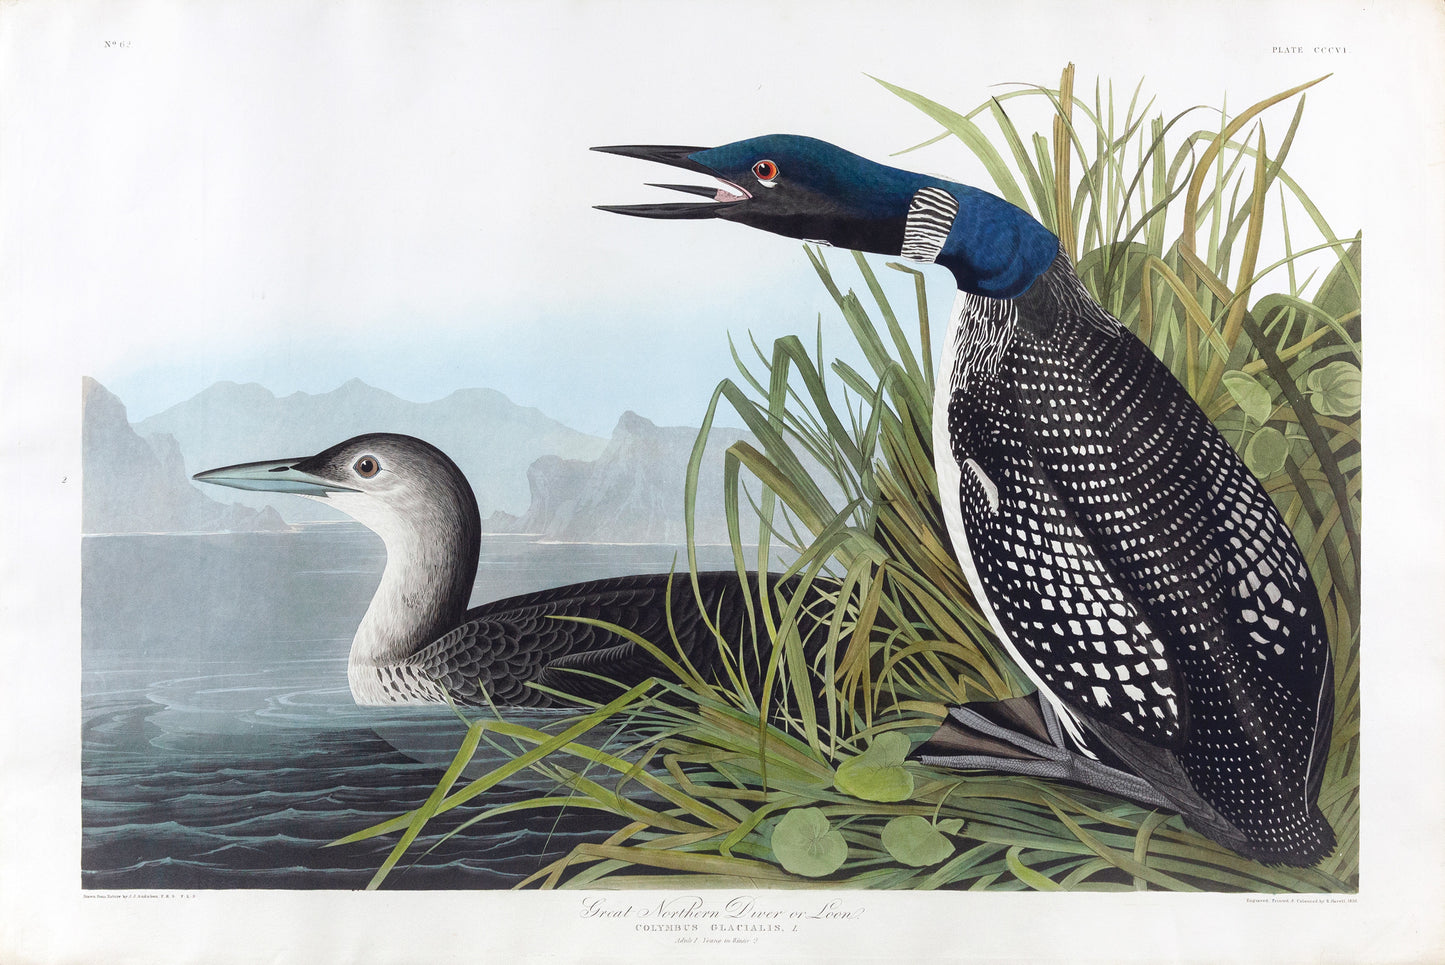 John James Audubon (1785-1851), Plate CCCVI Great Northern Diver or Loon